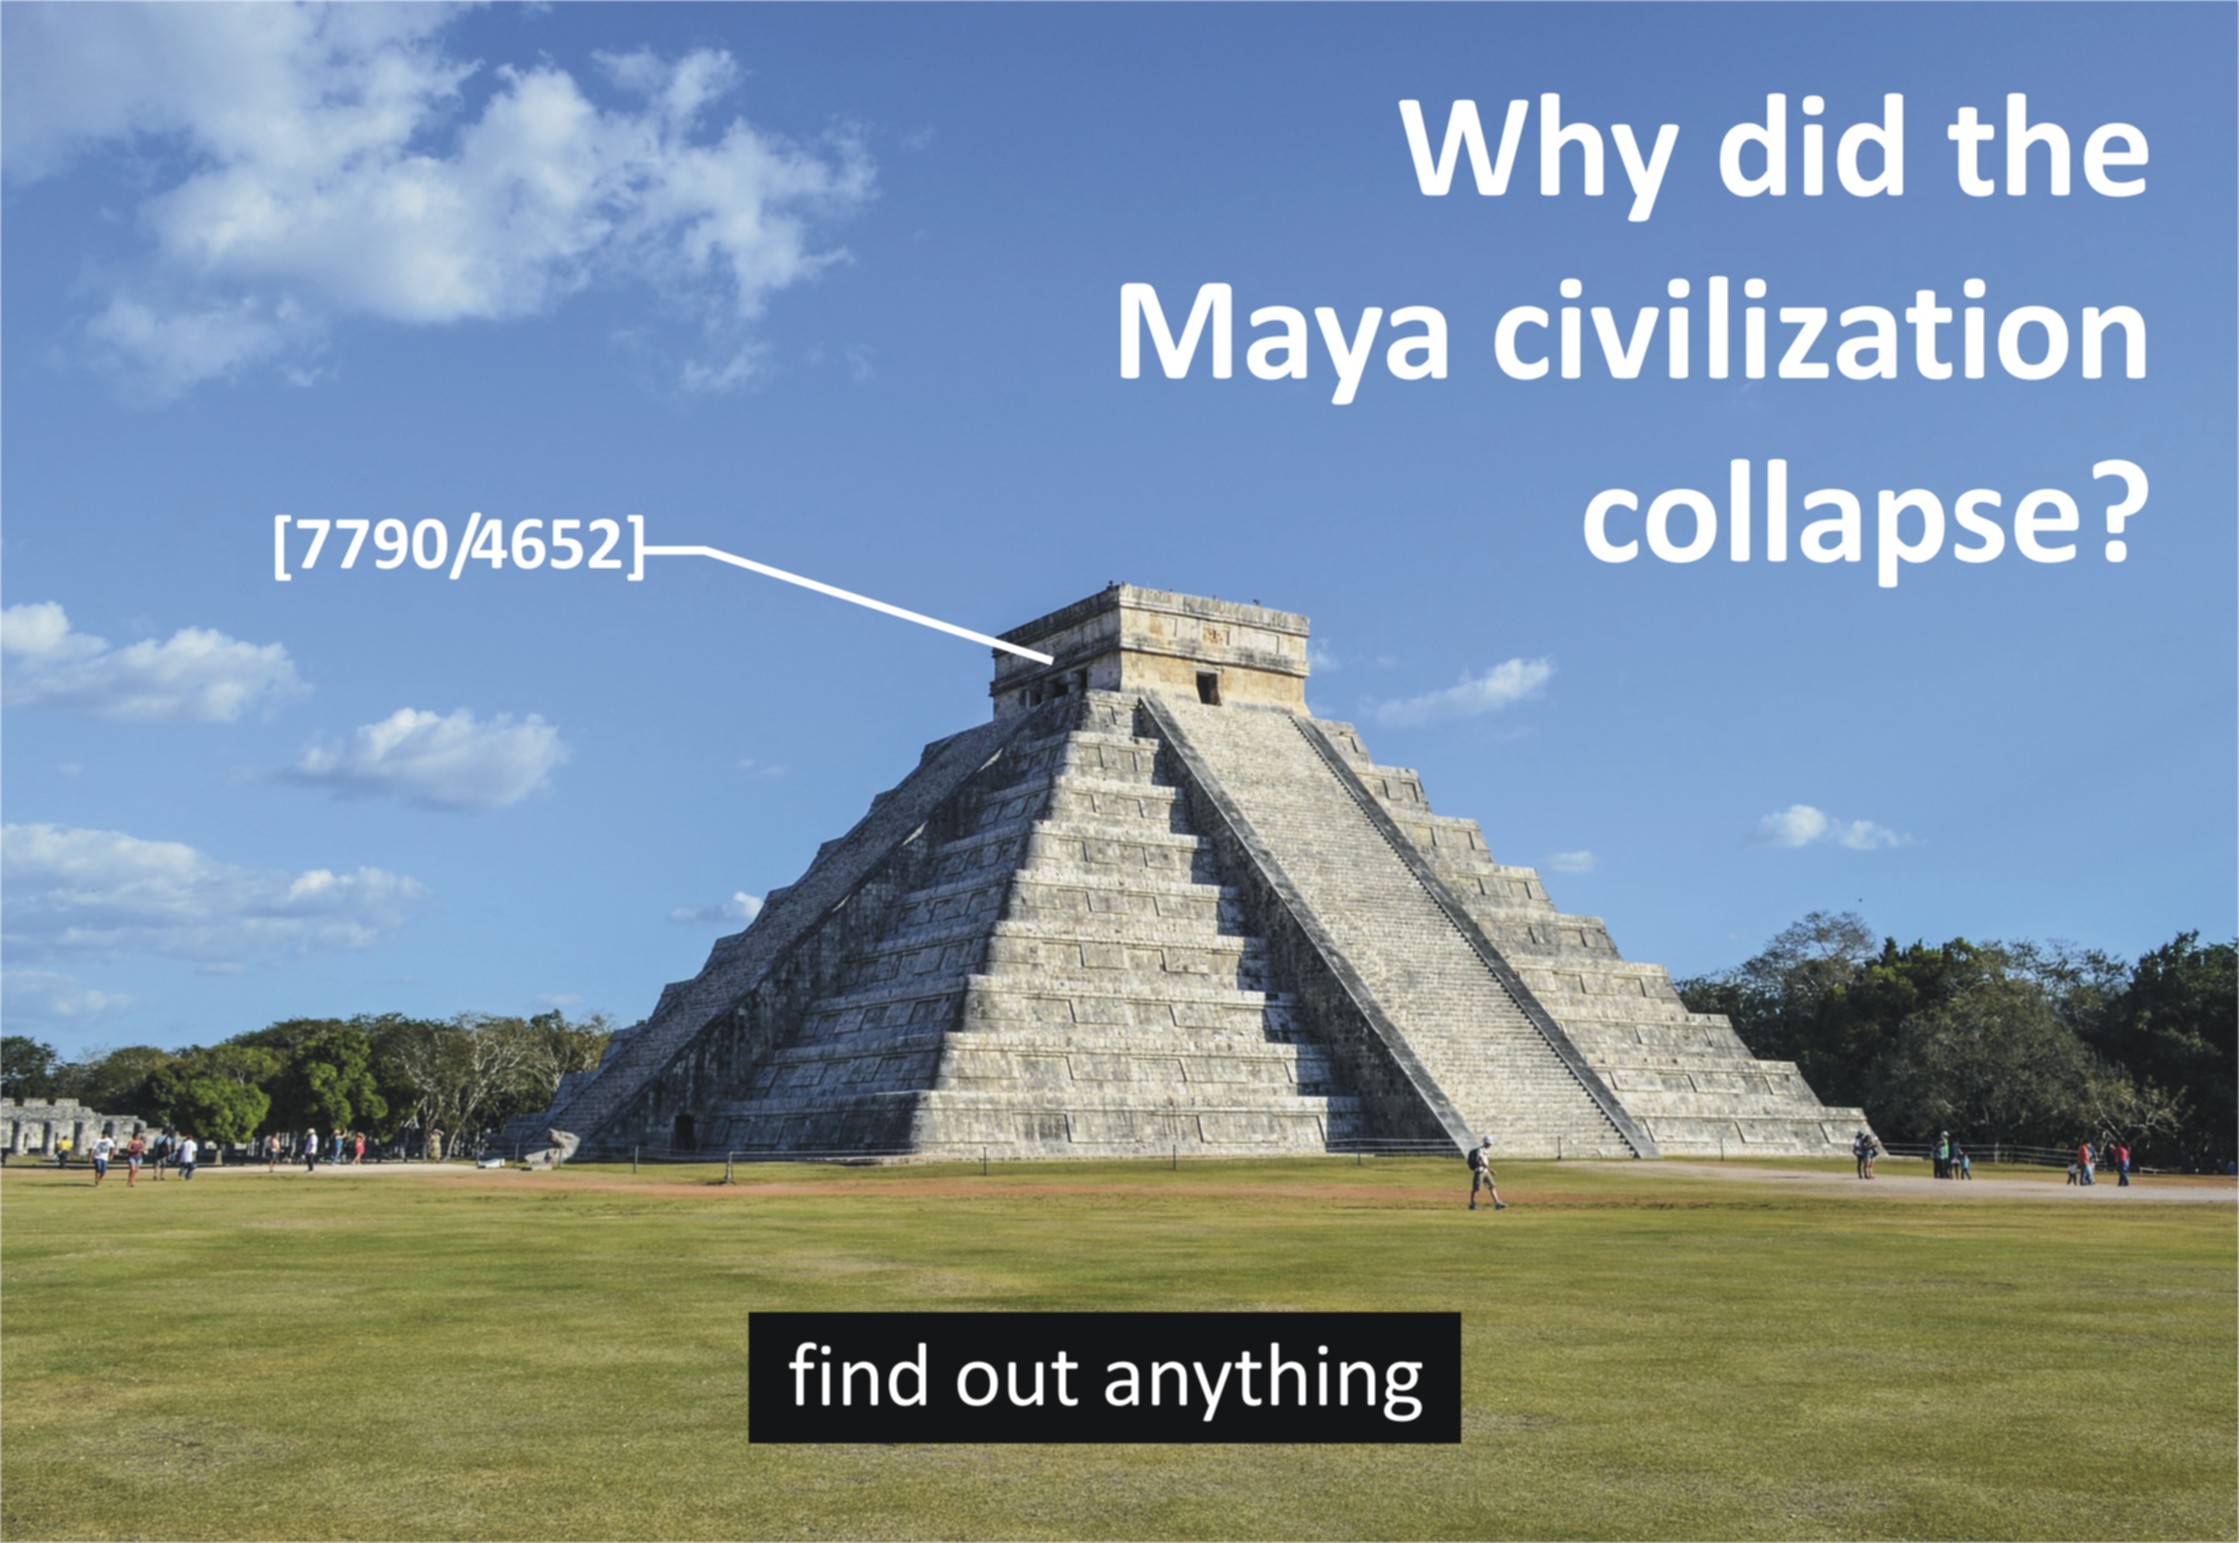 Why did the Maya civilzation collapse?